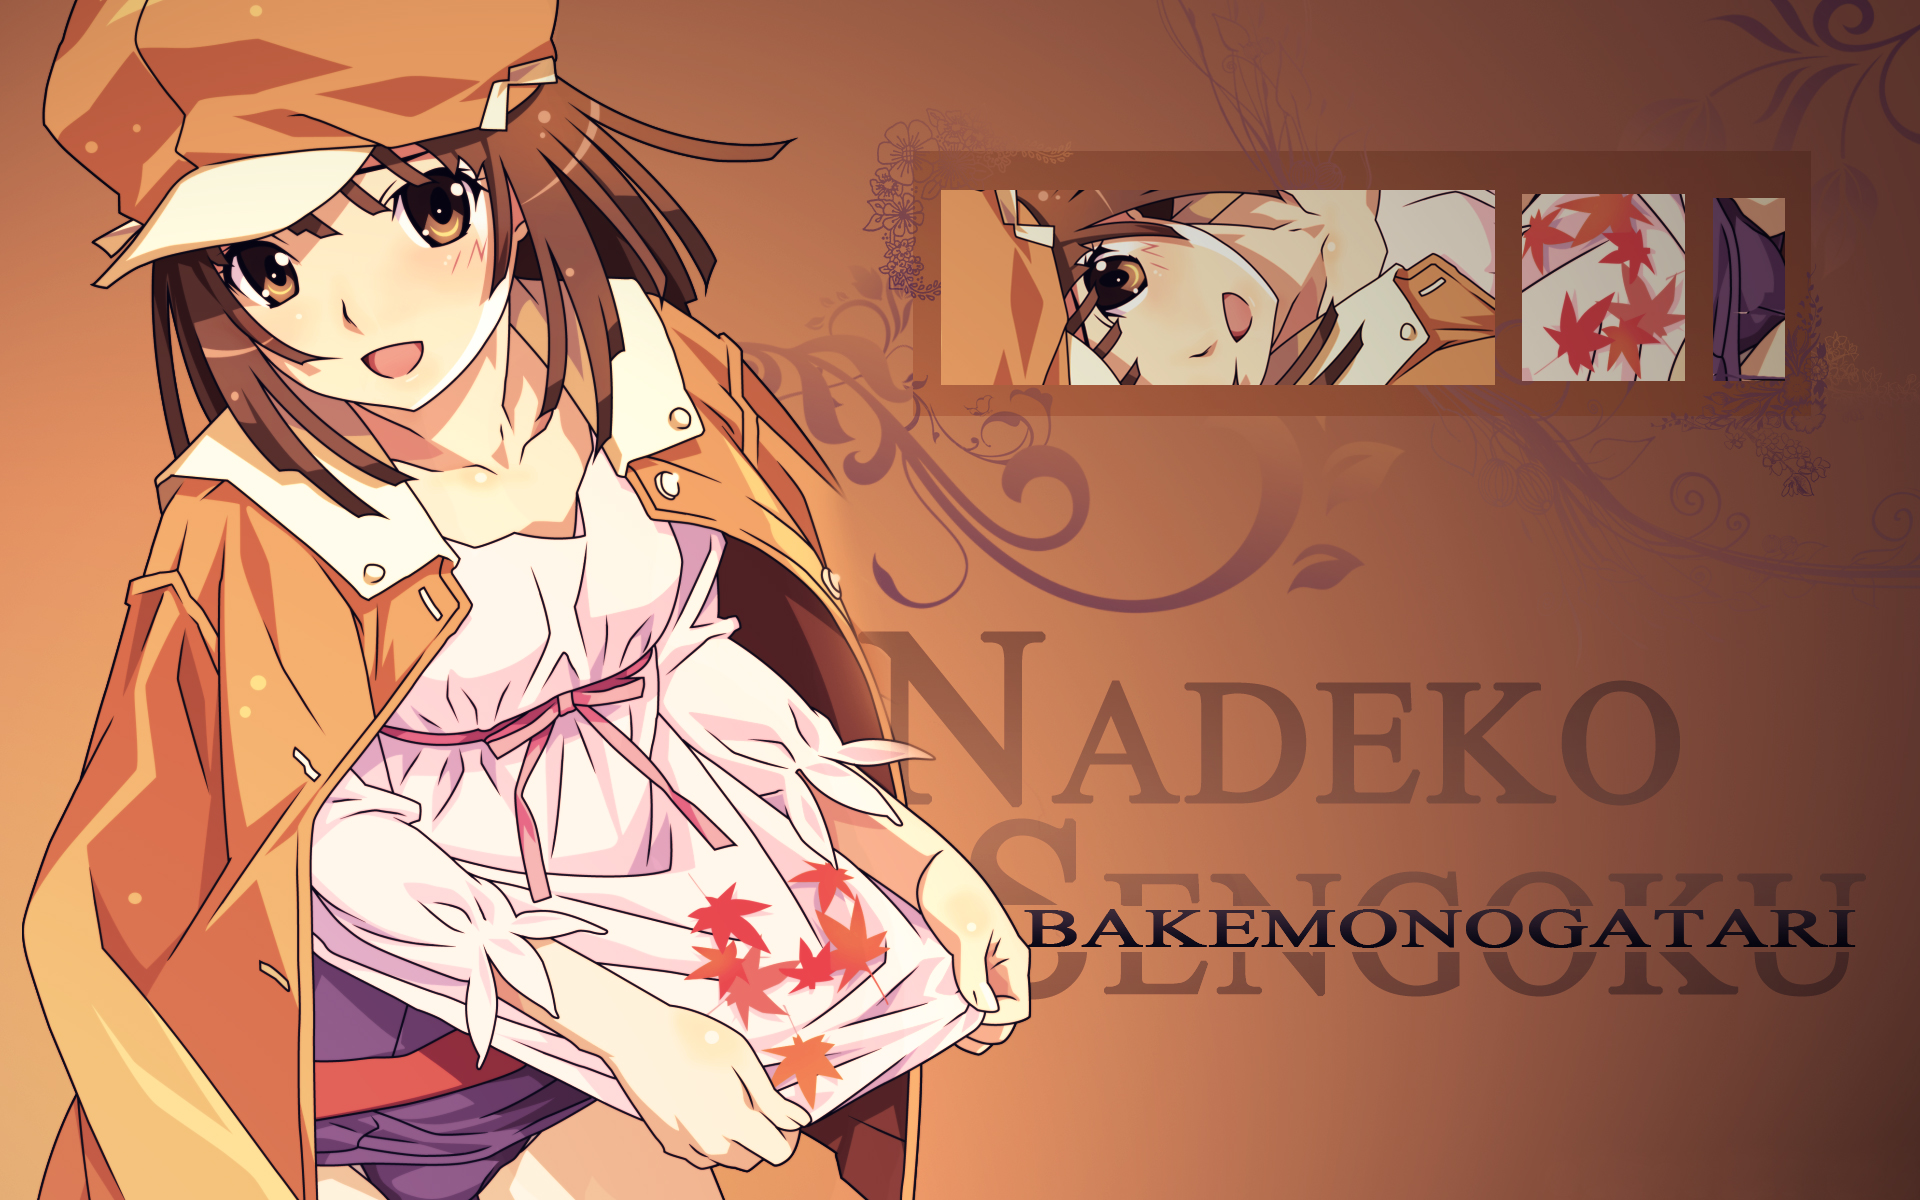 Nadeko Sengoku from the Anime series Monogatari, in vibrant desktop wallpaper.